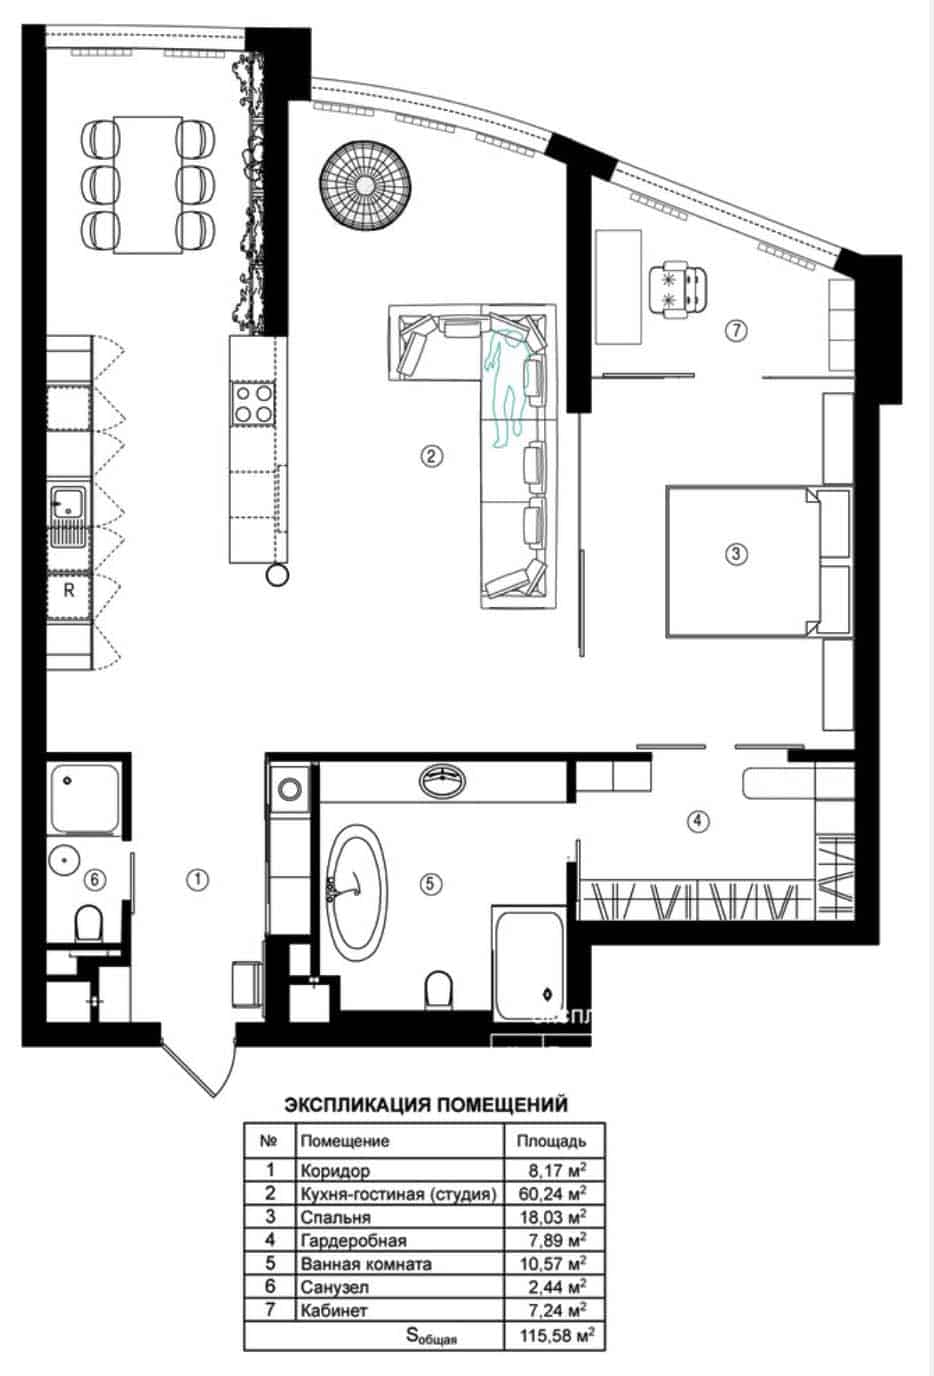 Industrial Loft-MARTIN Architects-21-1 Kindesign